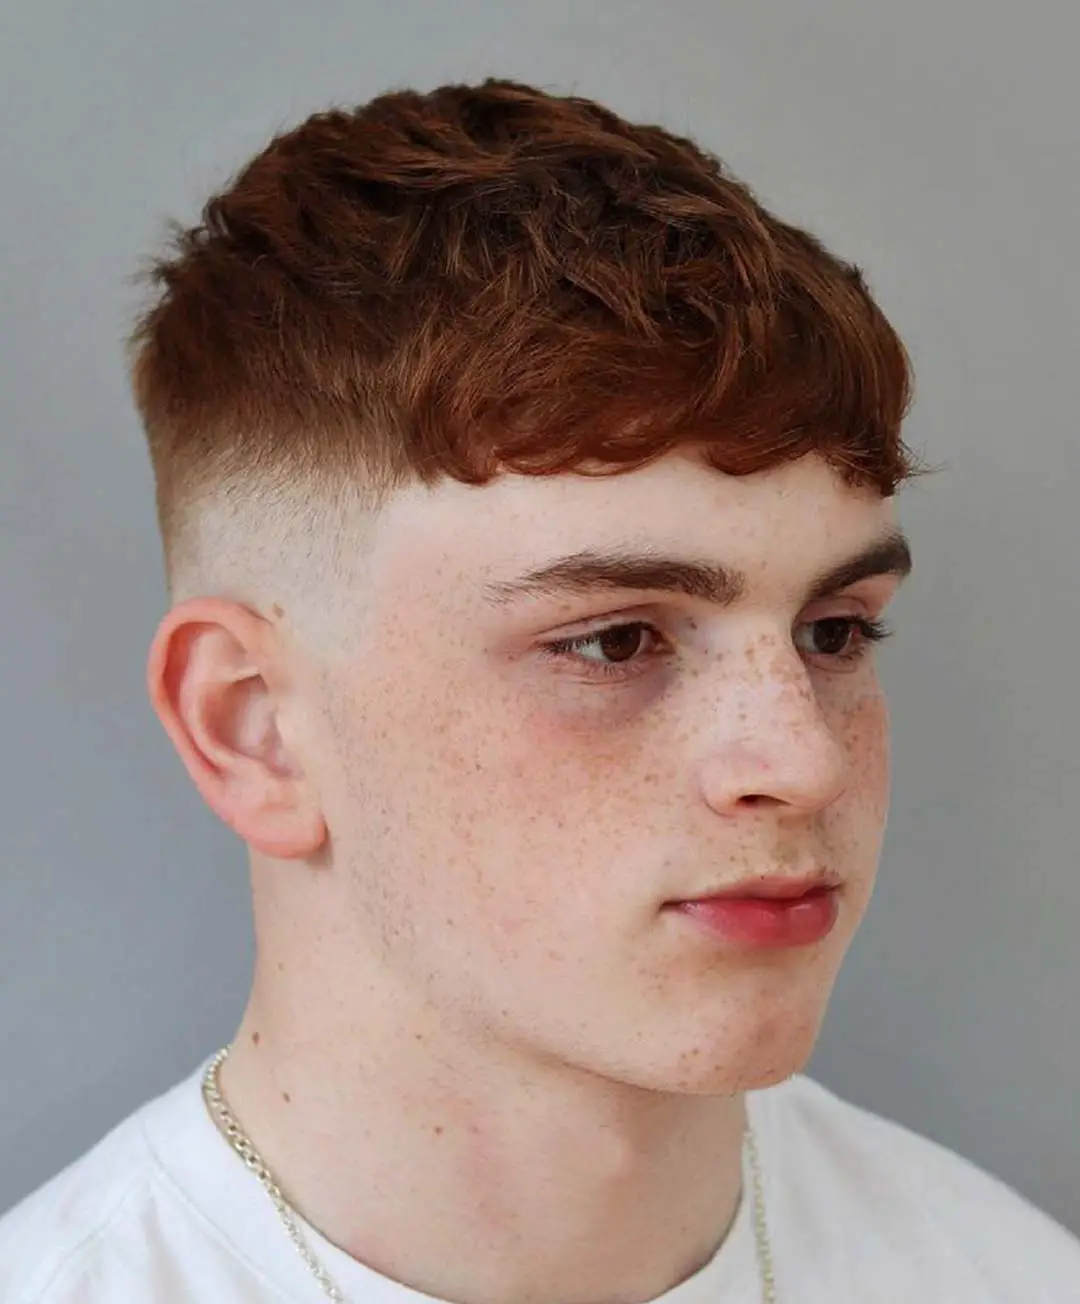 Teenager Haircut